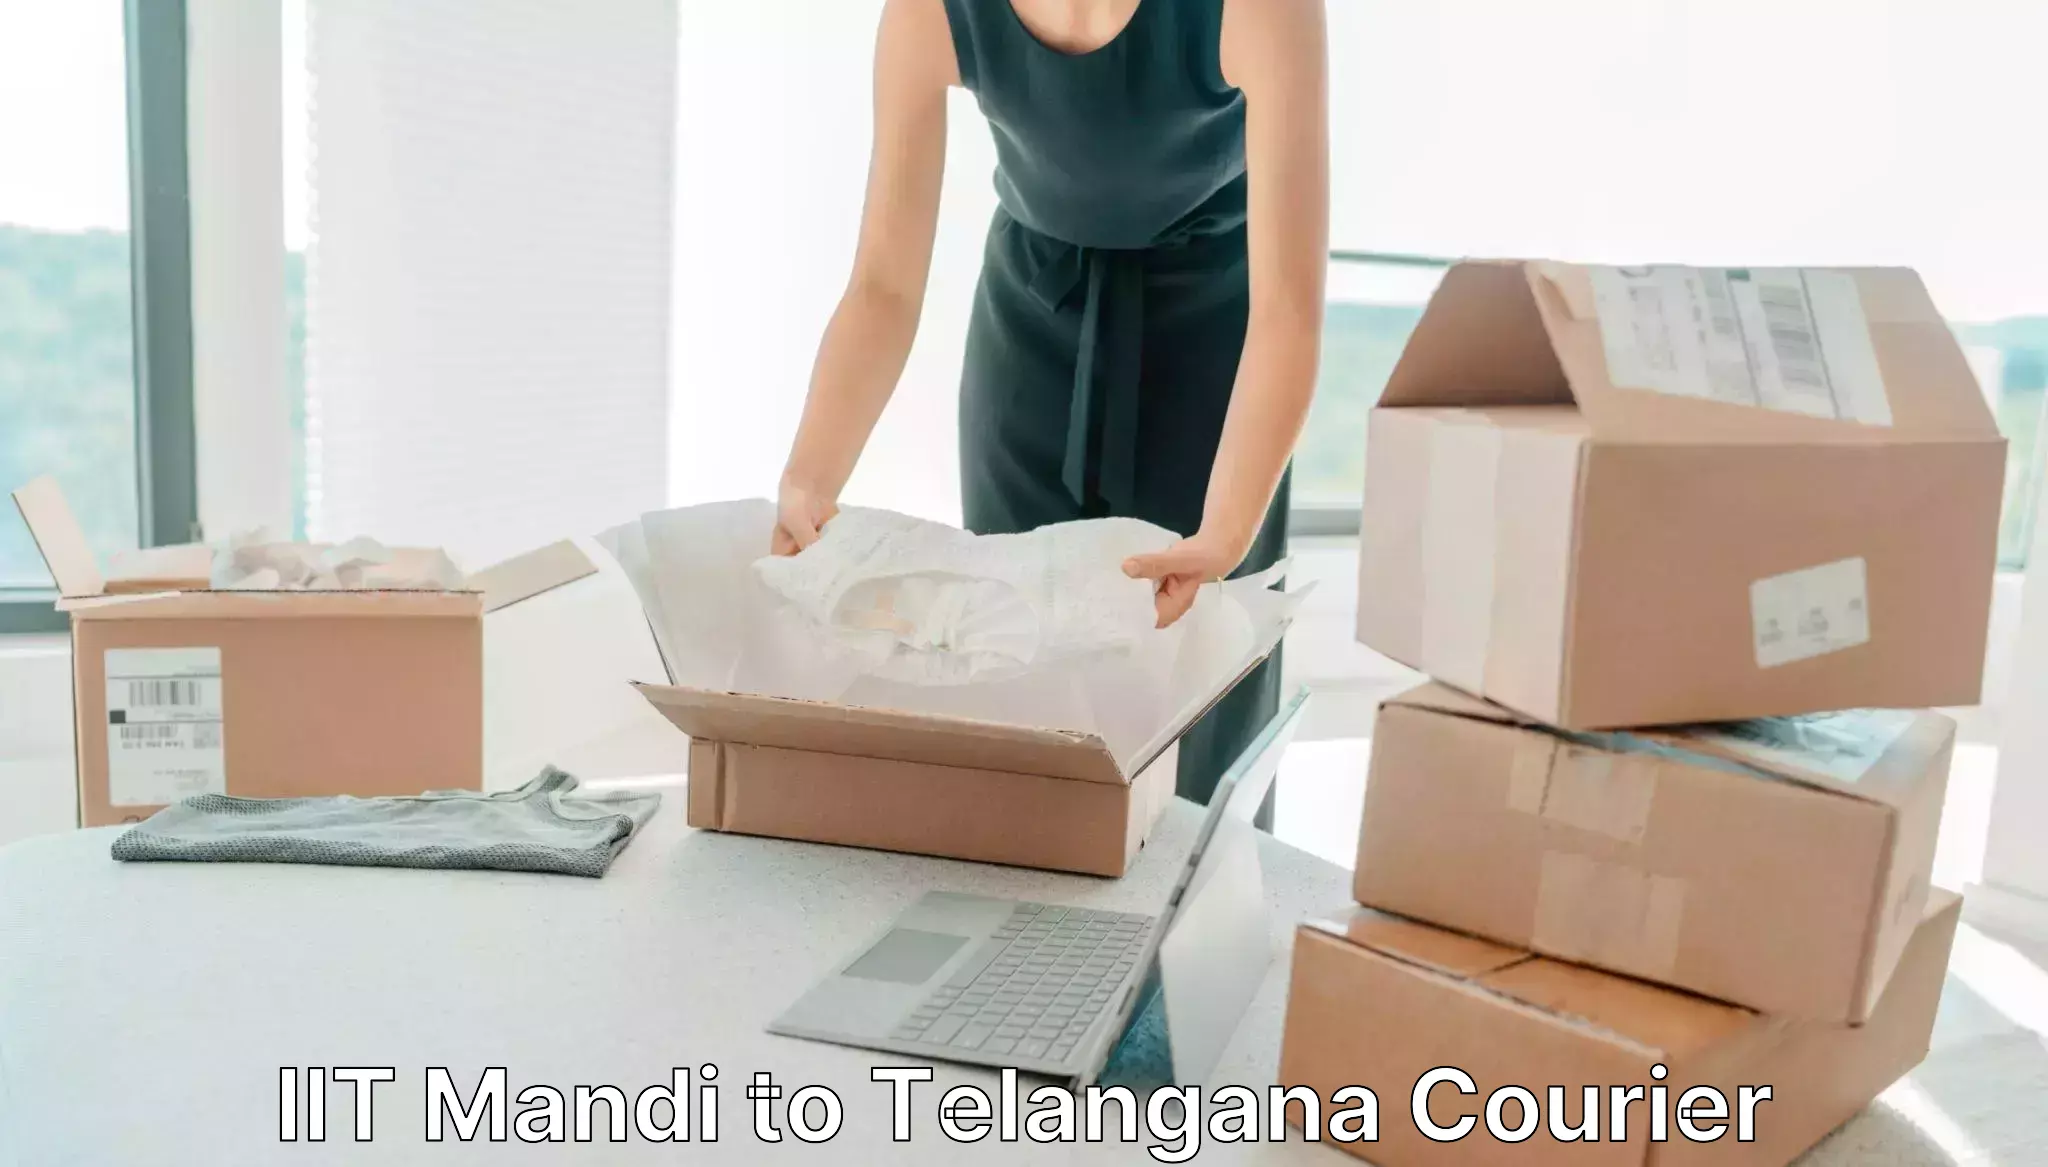 Fast delivery service IIT Mandi to Bhadrachalam